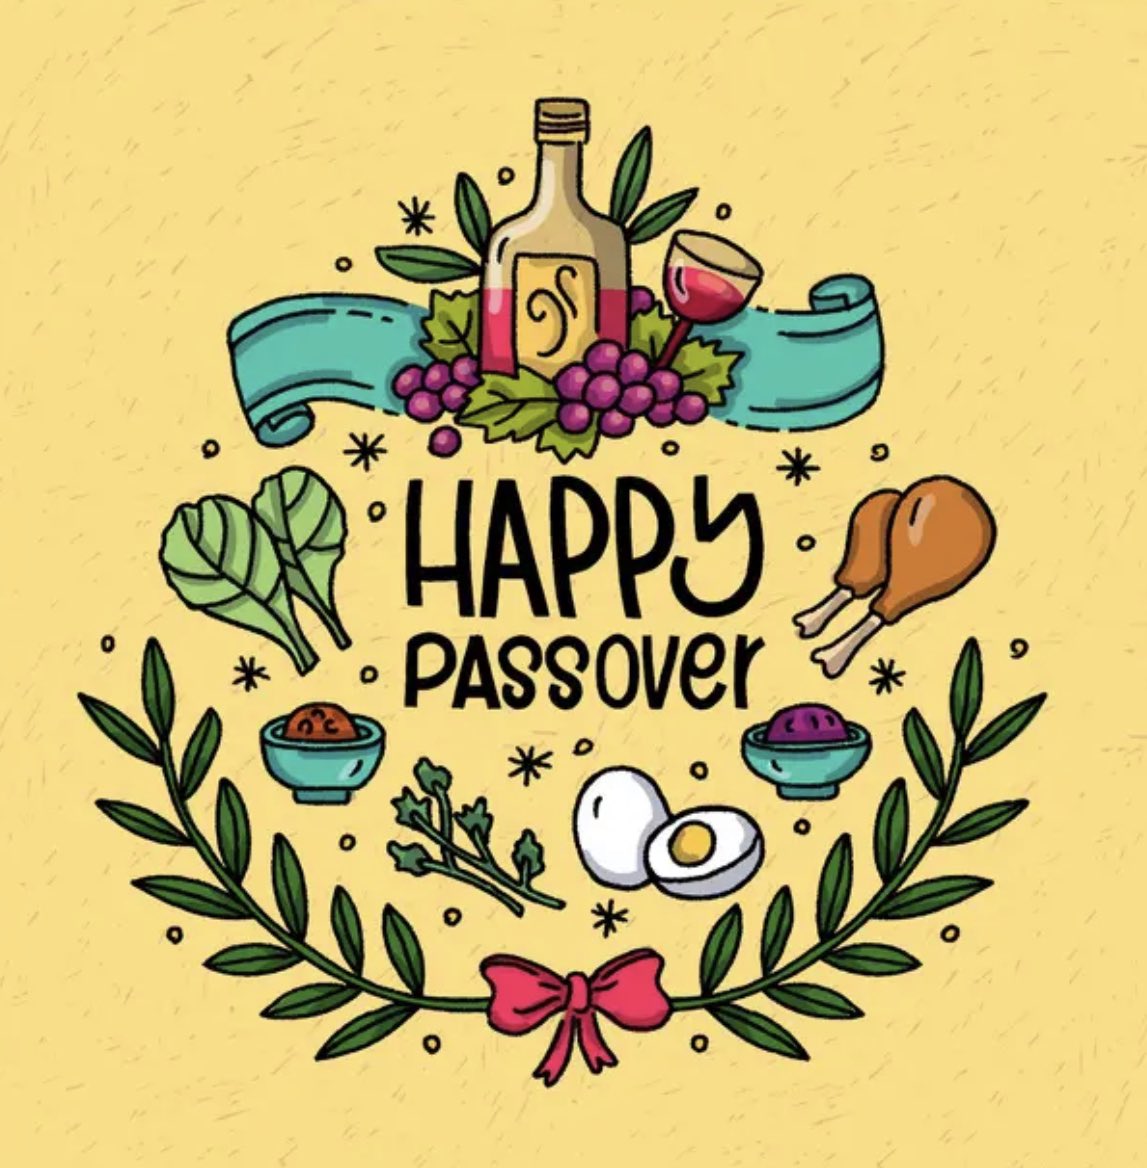 Wishing all those who celebrate – Happy Passover! #ChagSameach